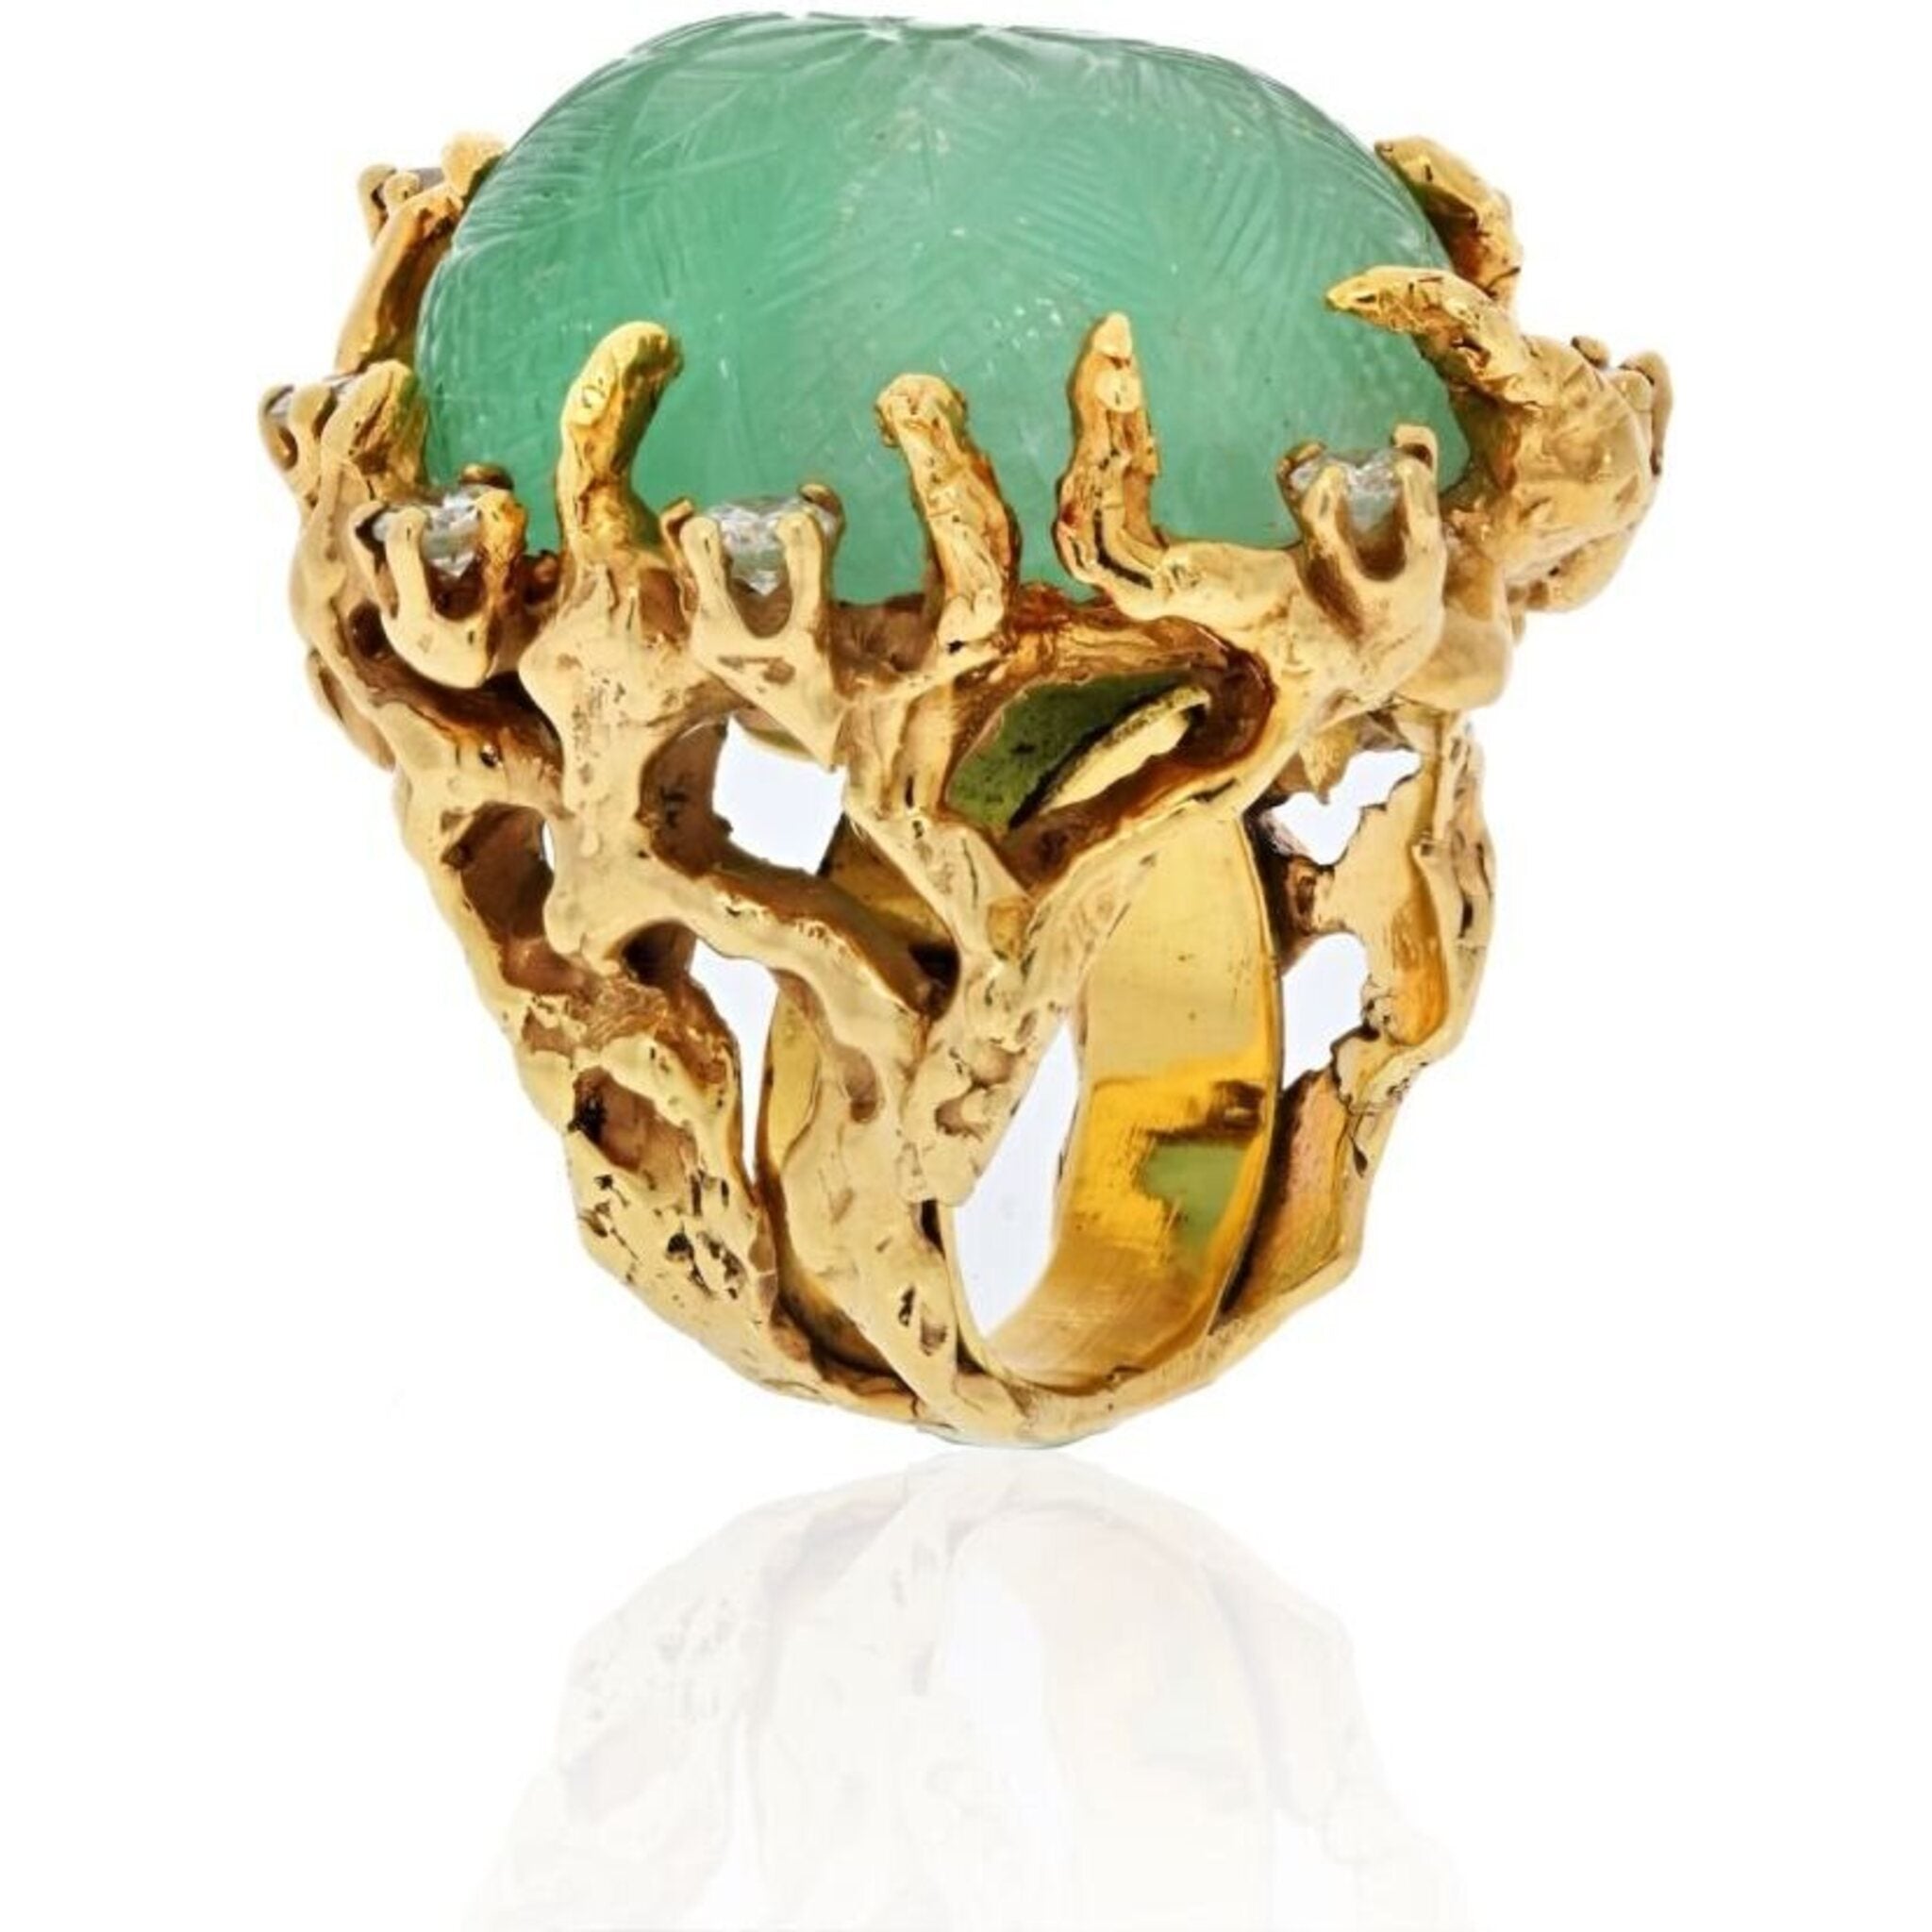 Arthur King - Arthur King 14K Yellow Gold Large Carved Emerald Diamond Ring